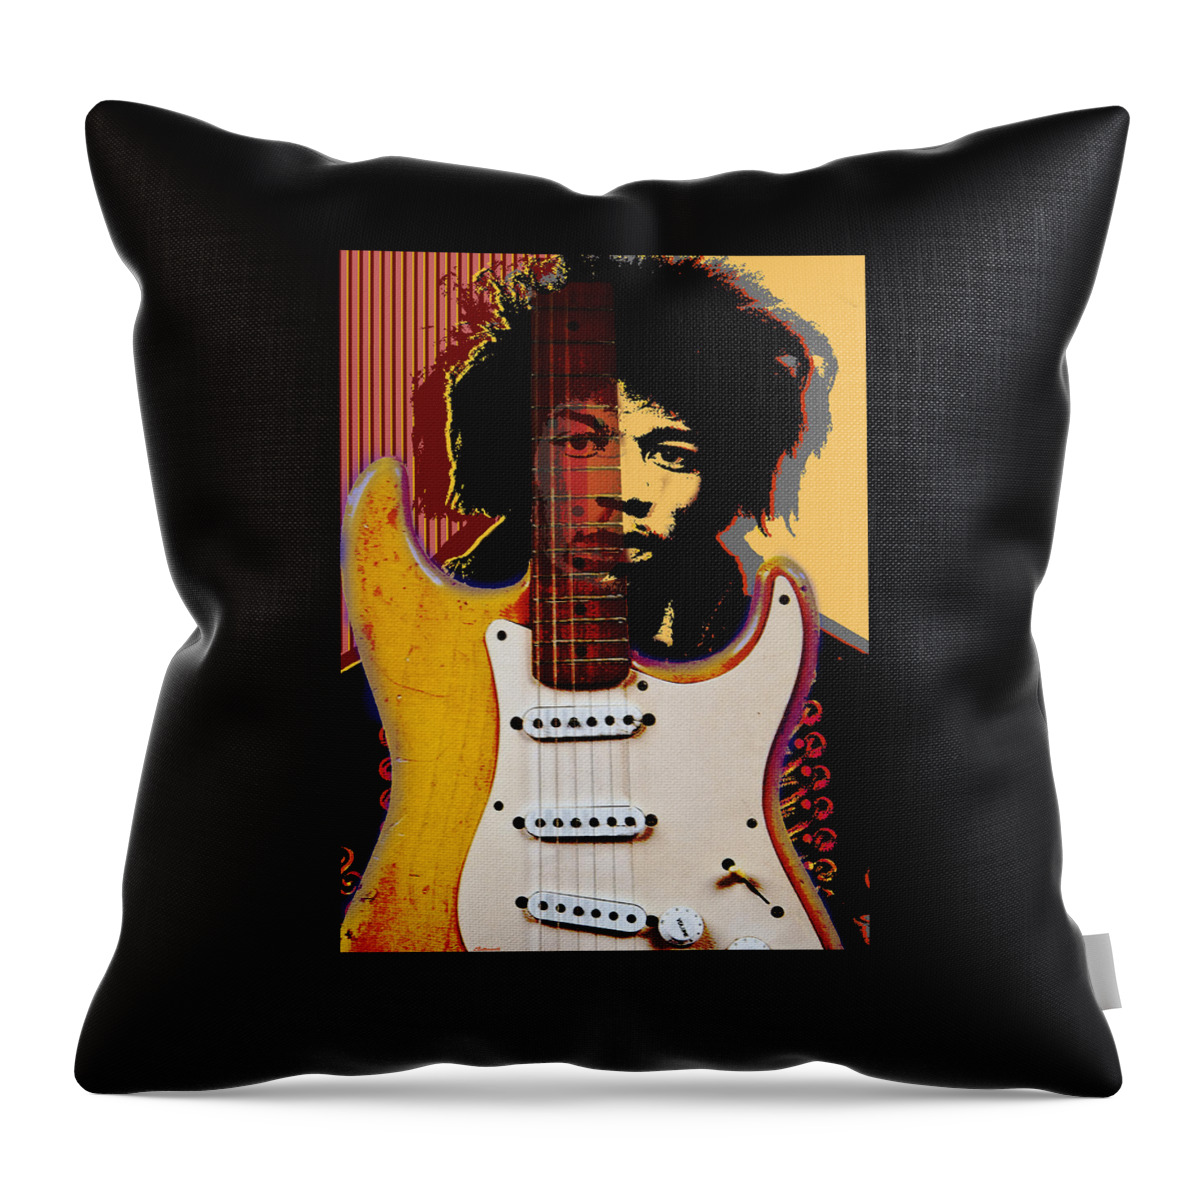  Jimi Hendrix Throw Pillow featuring the digital art Jimi Hendrix Electric Guitarist by Larry Butterworth